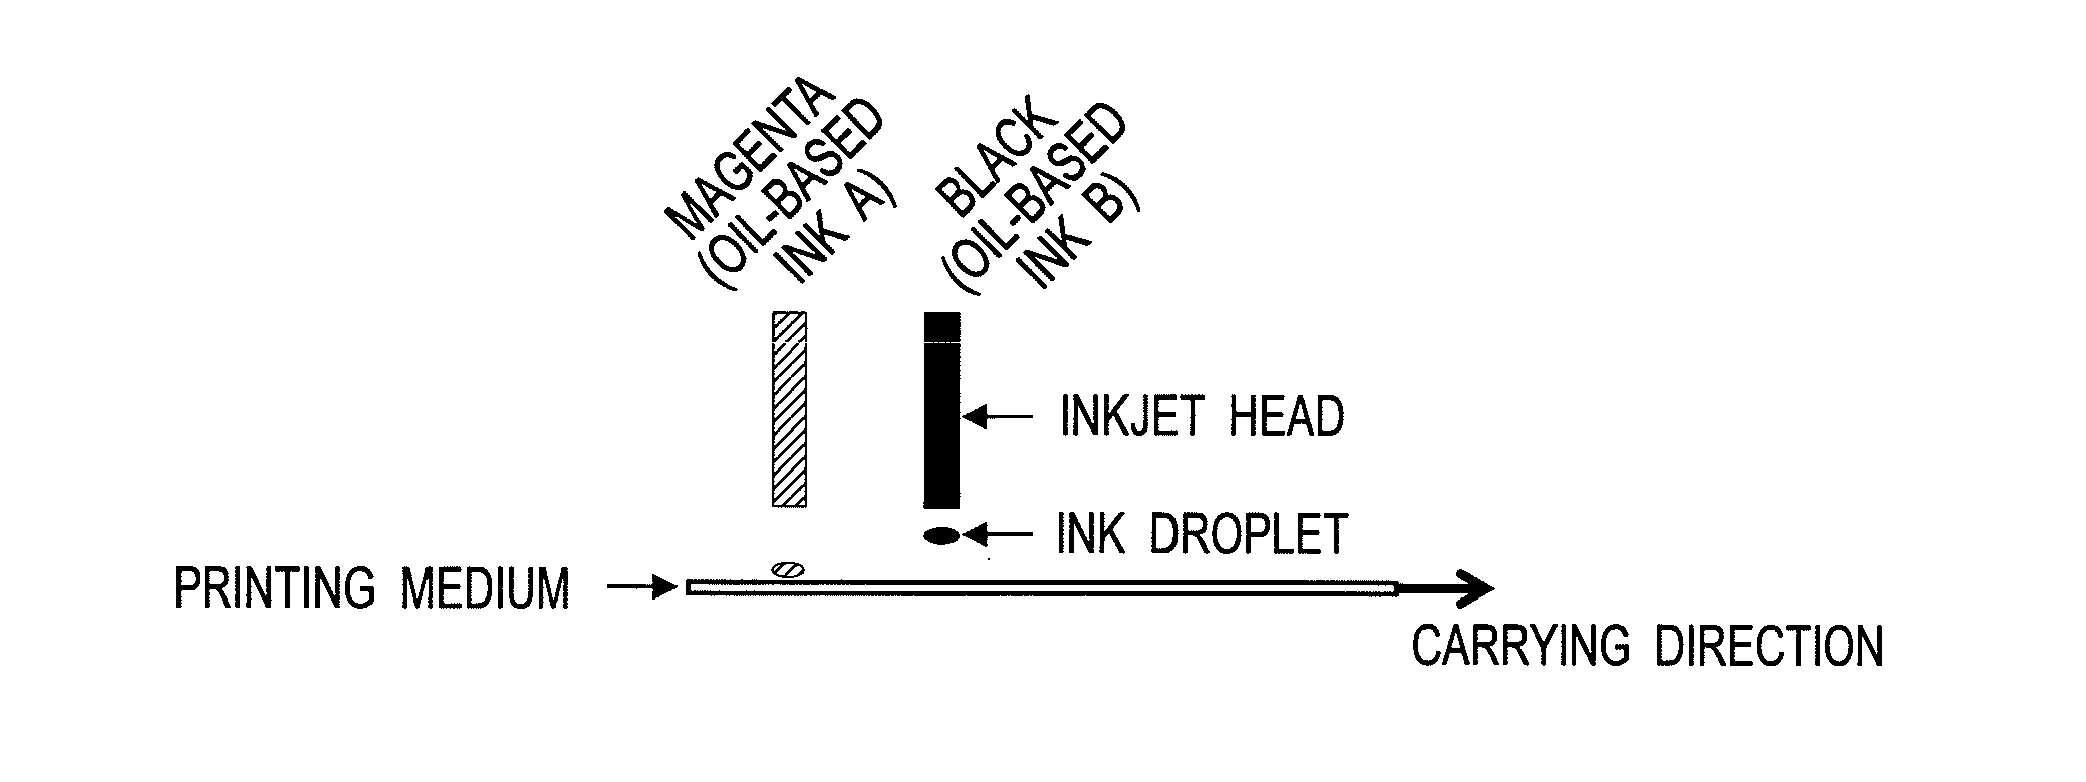 Inkjet printing method and inkjet printer used in the printing method